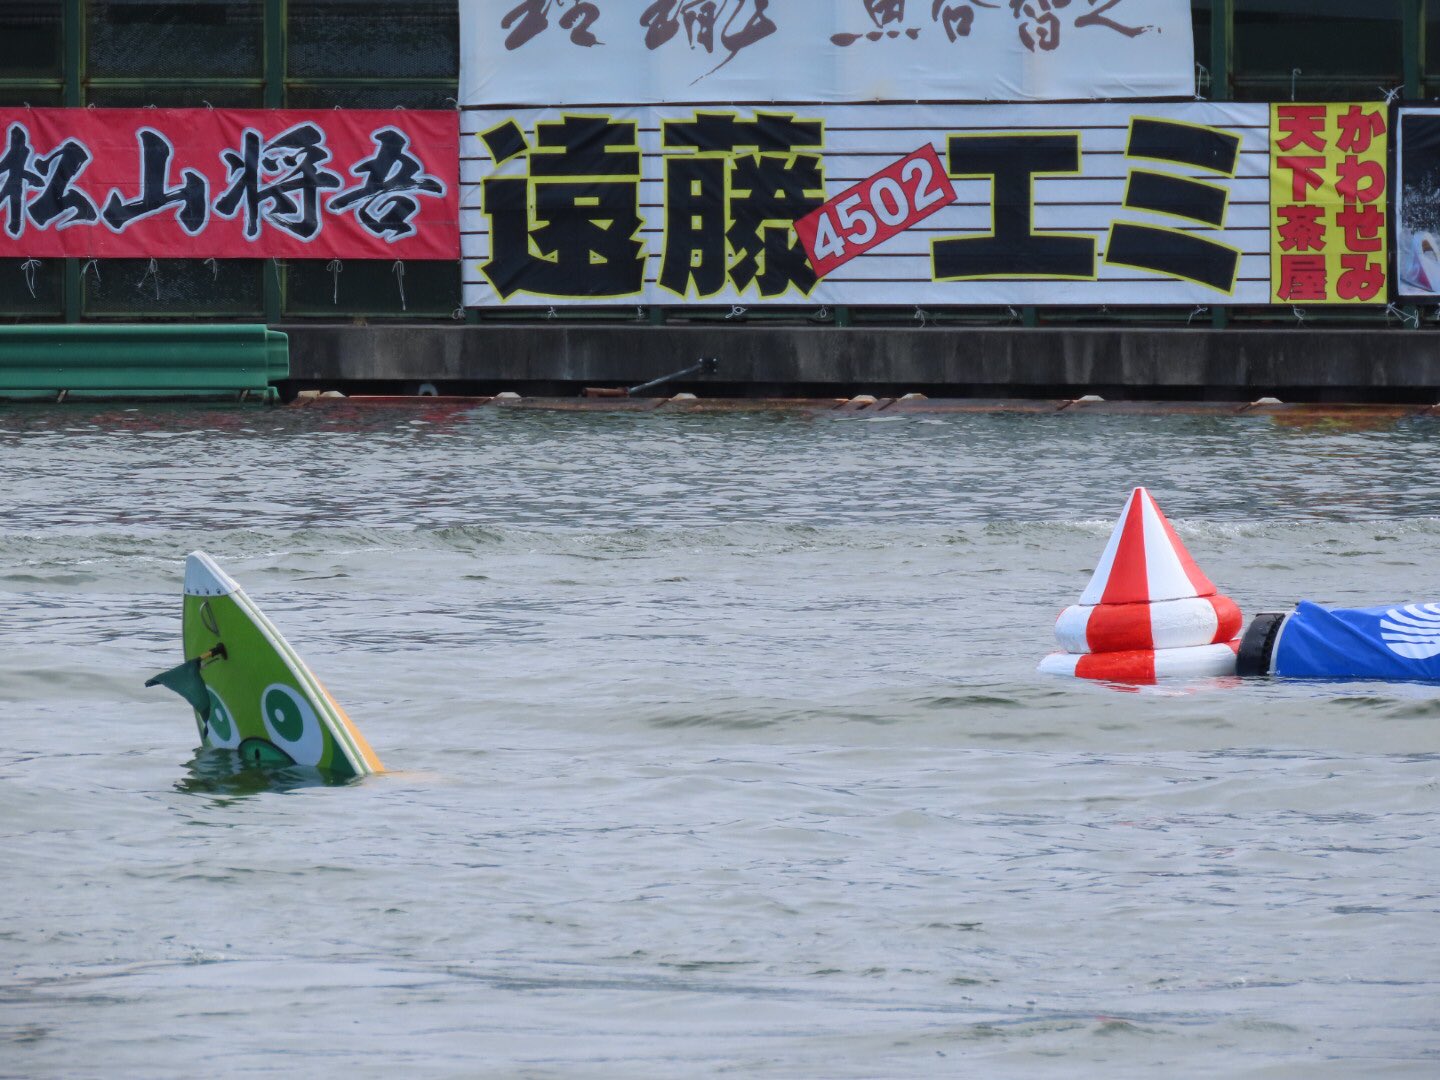 競艇 死亡 事故 尼崎 尼崎競艇場でレース中に衝突事故、選手１人死亡